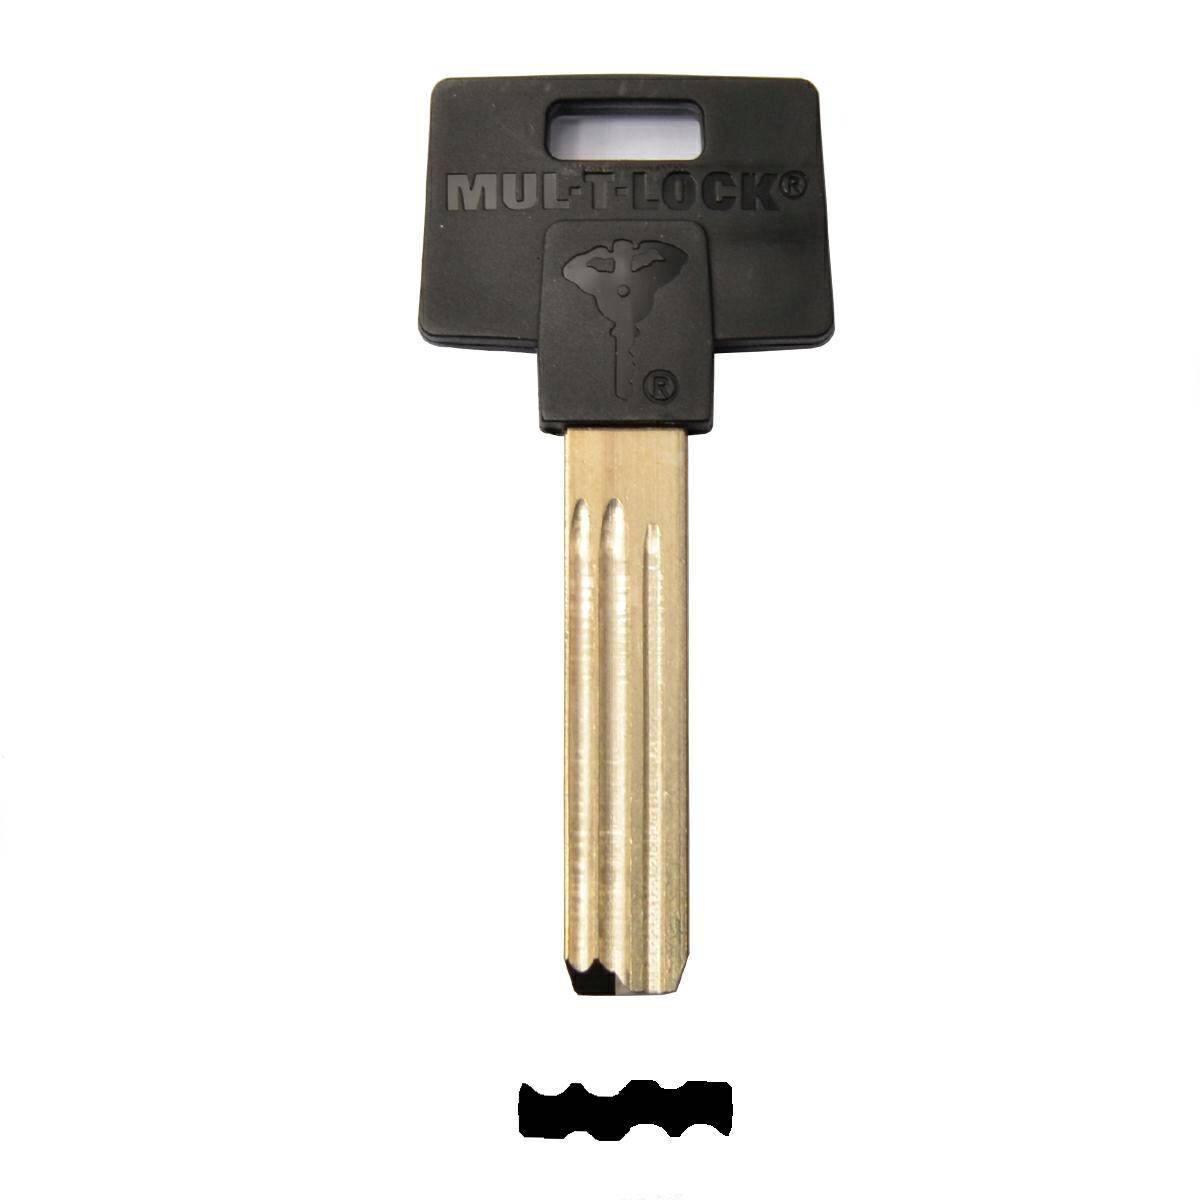 Schlüssel MUL-T-LOCK 008